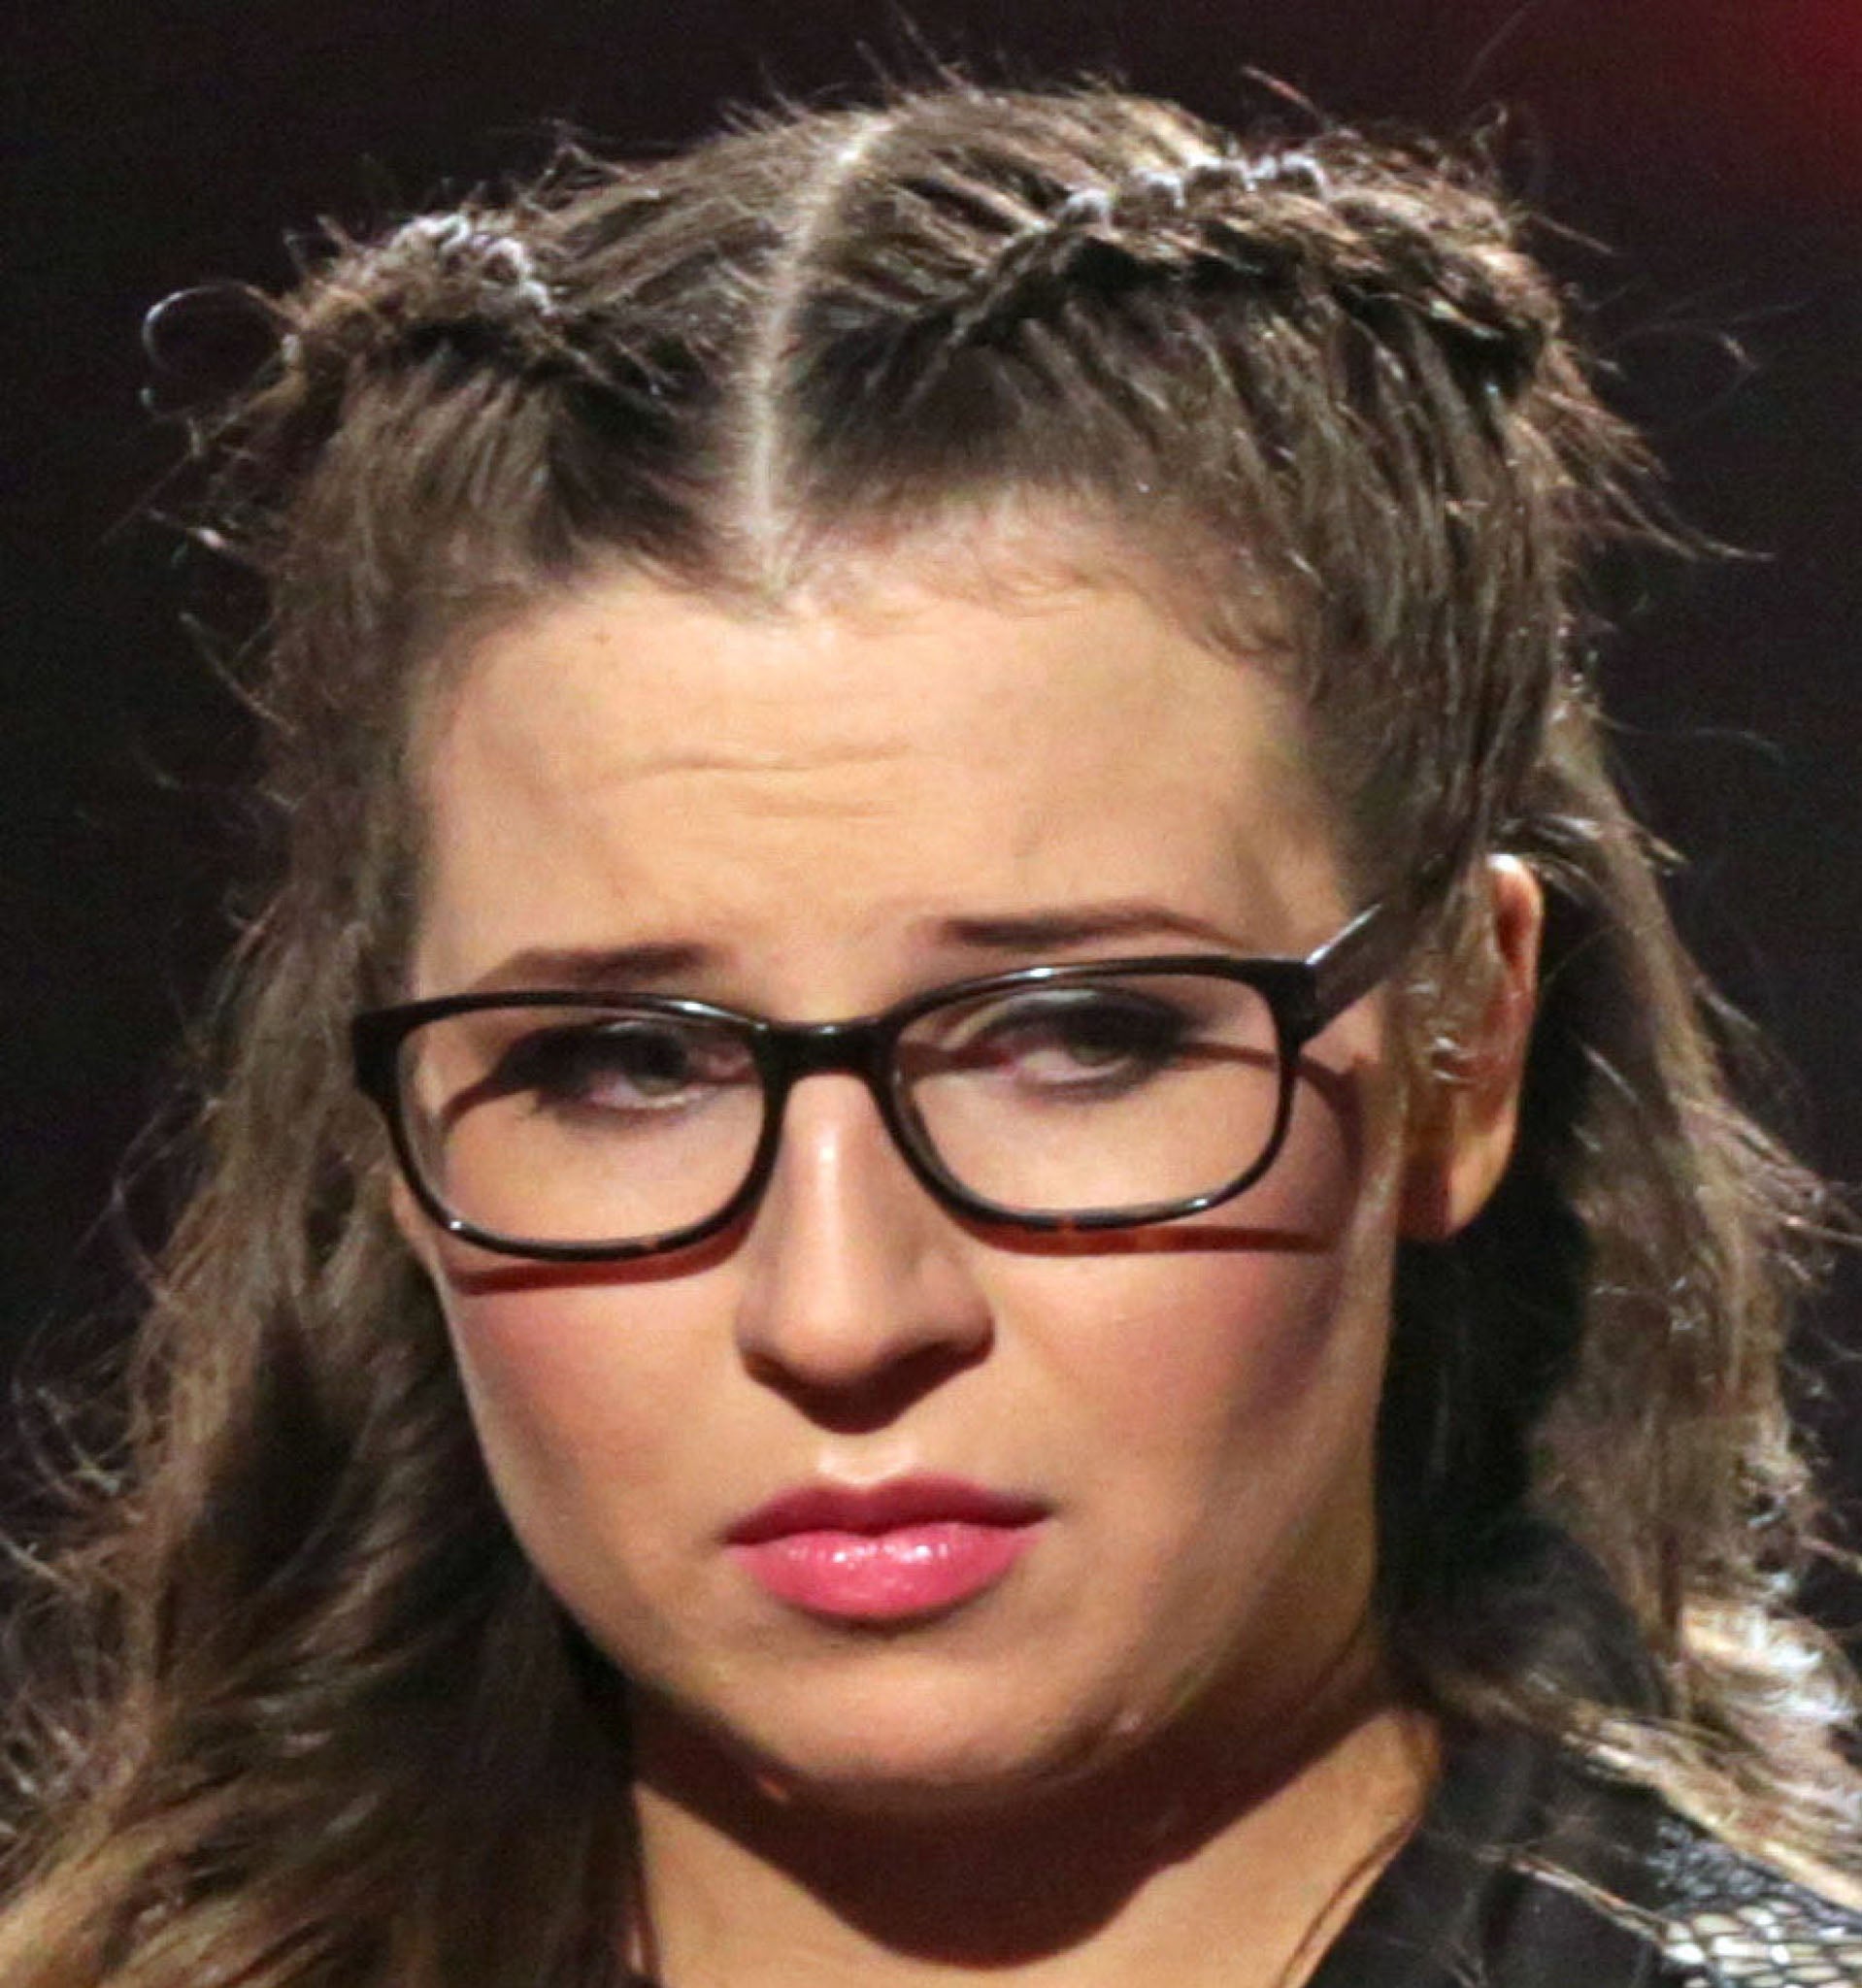 Abi Alton leaves The X Factor 2013